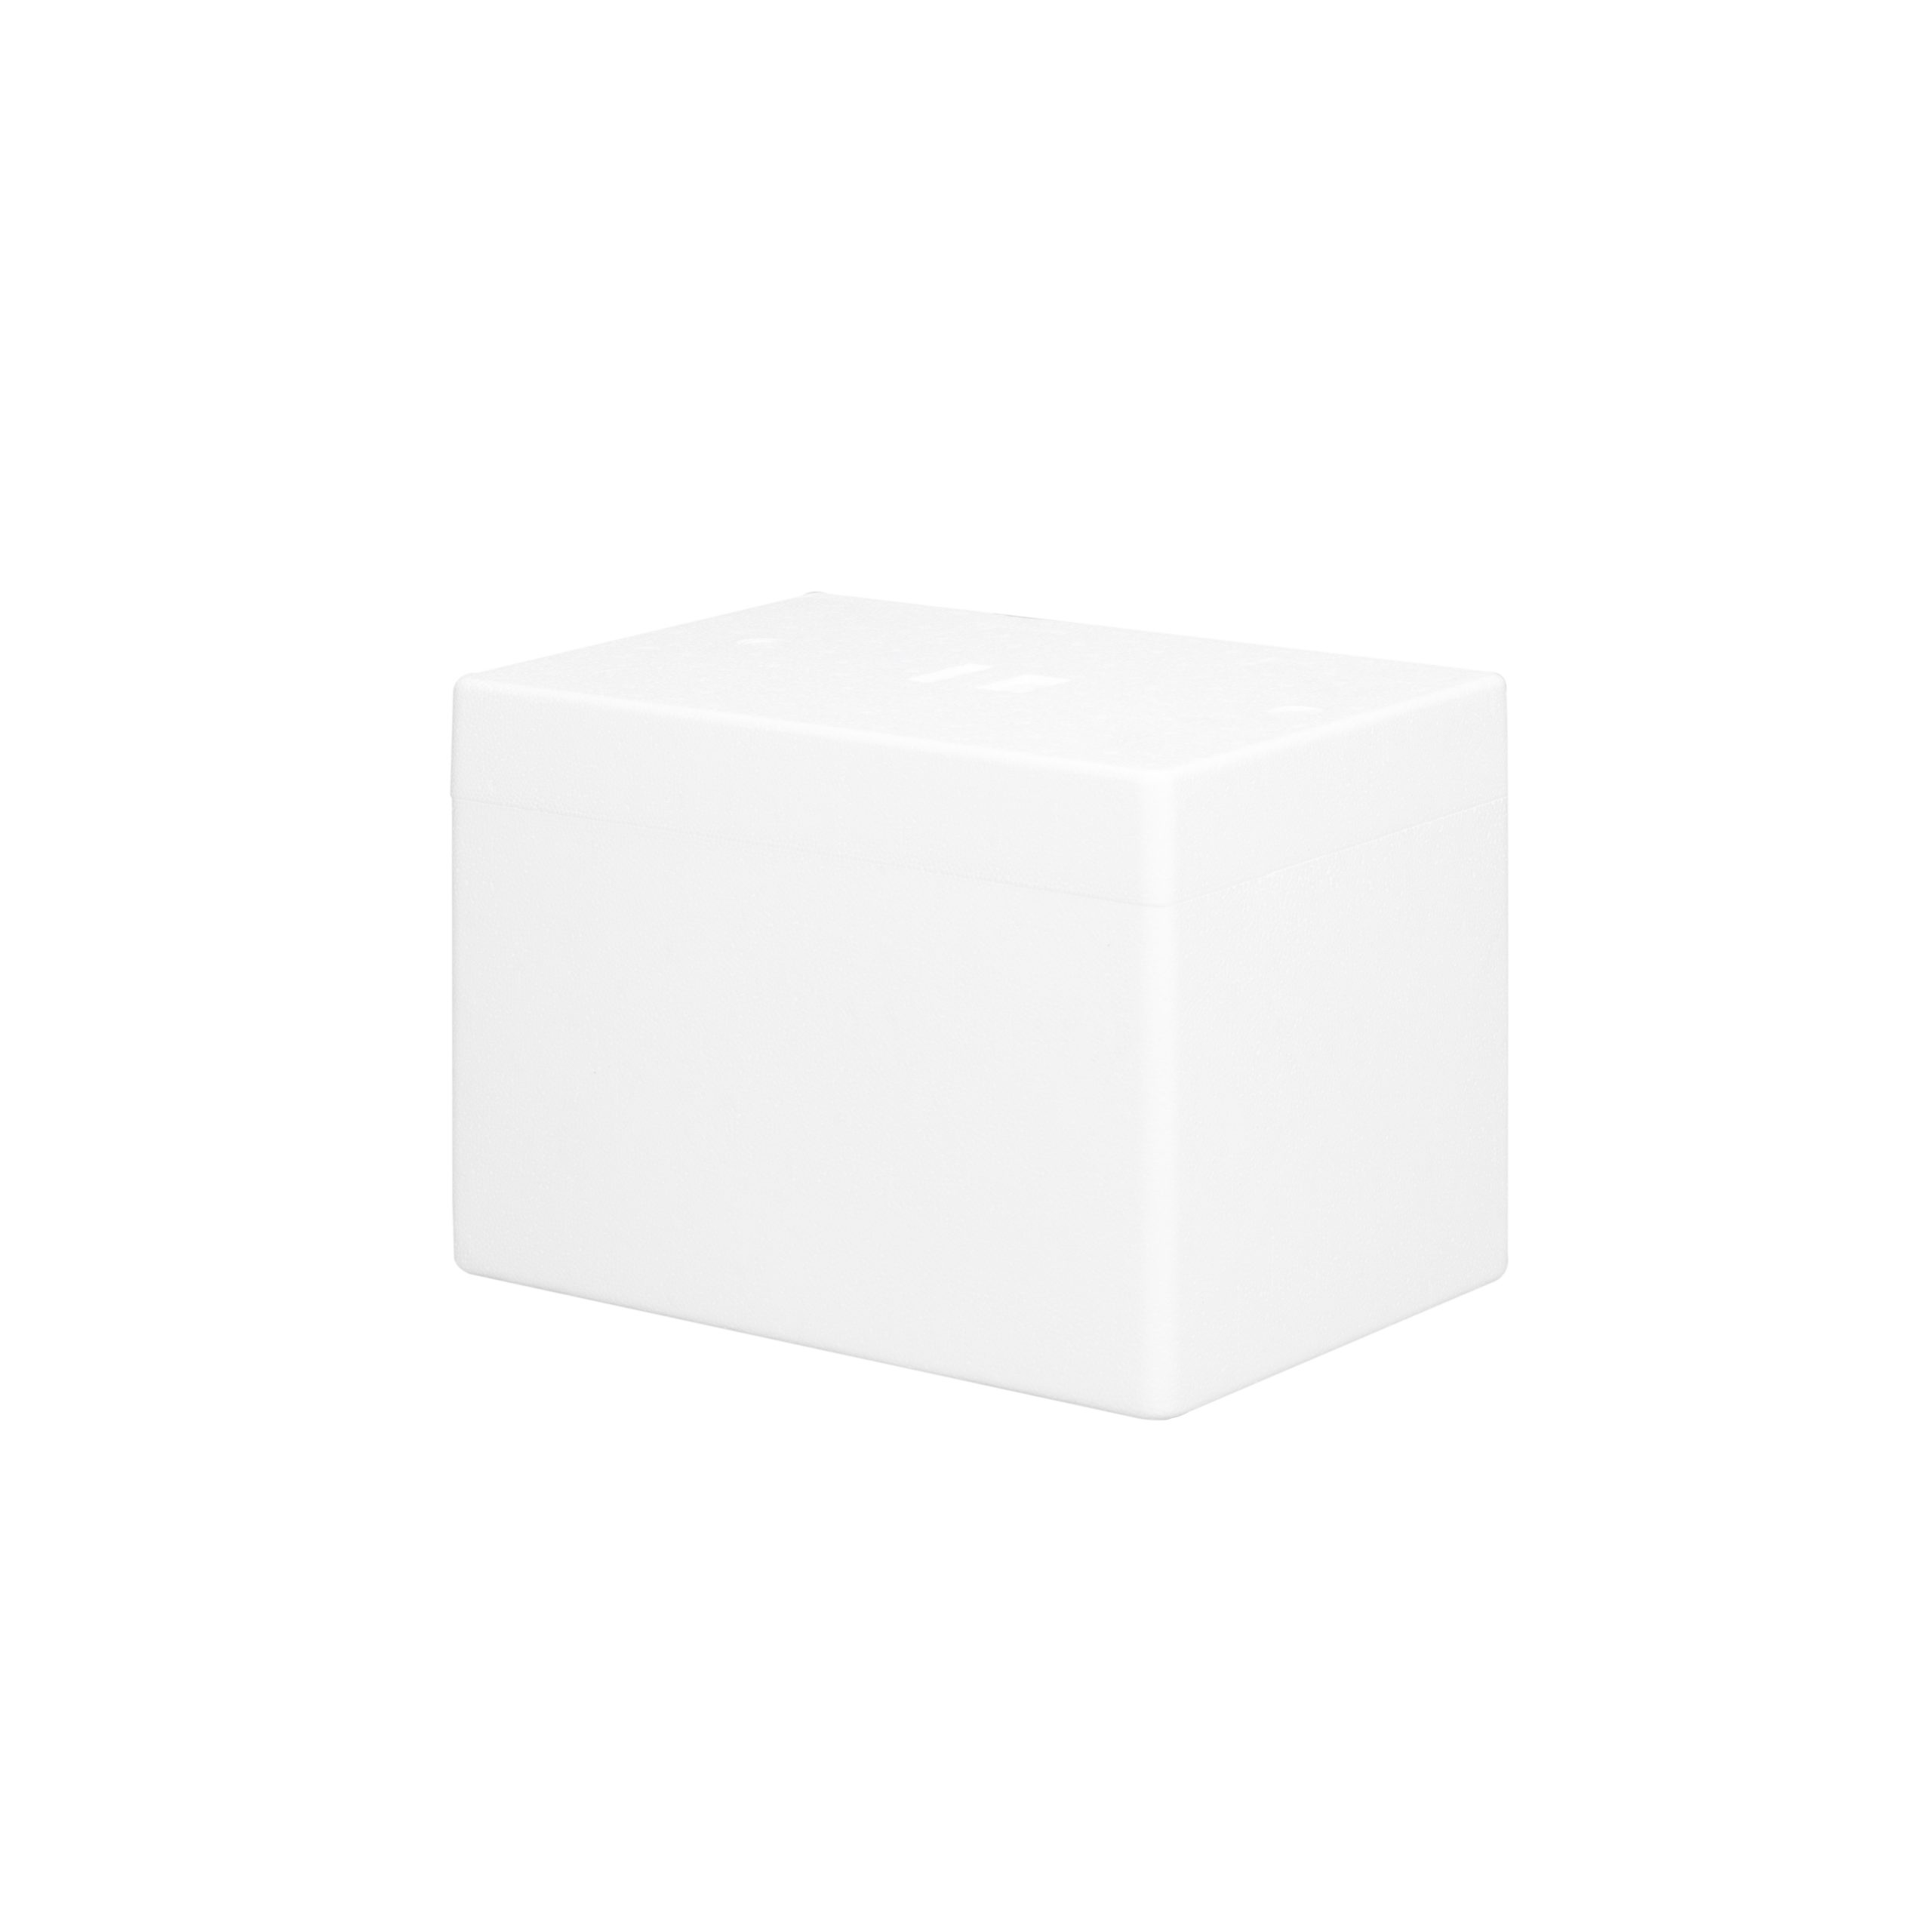 Insulated Box – 325 x 205 x 210mm